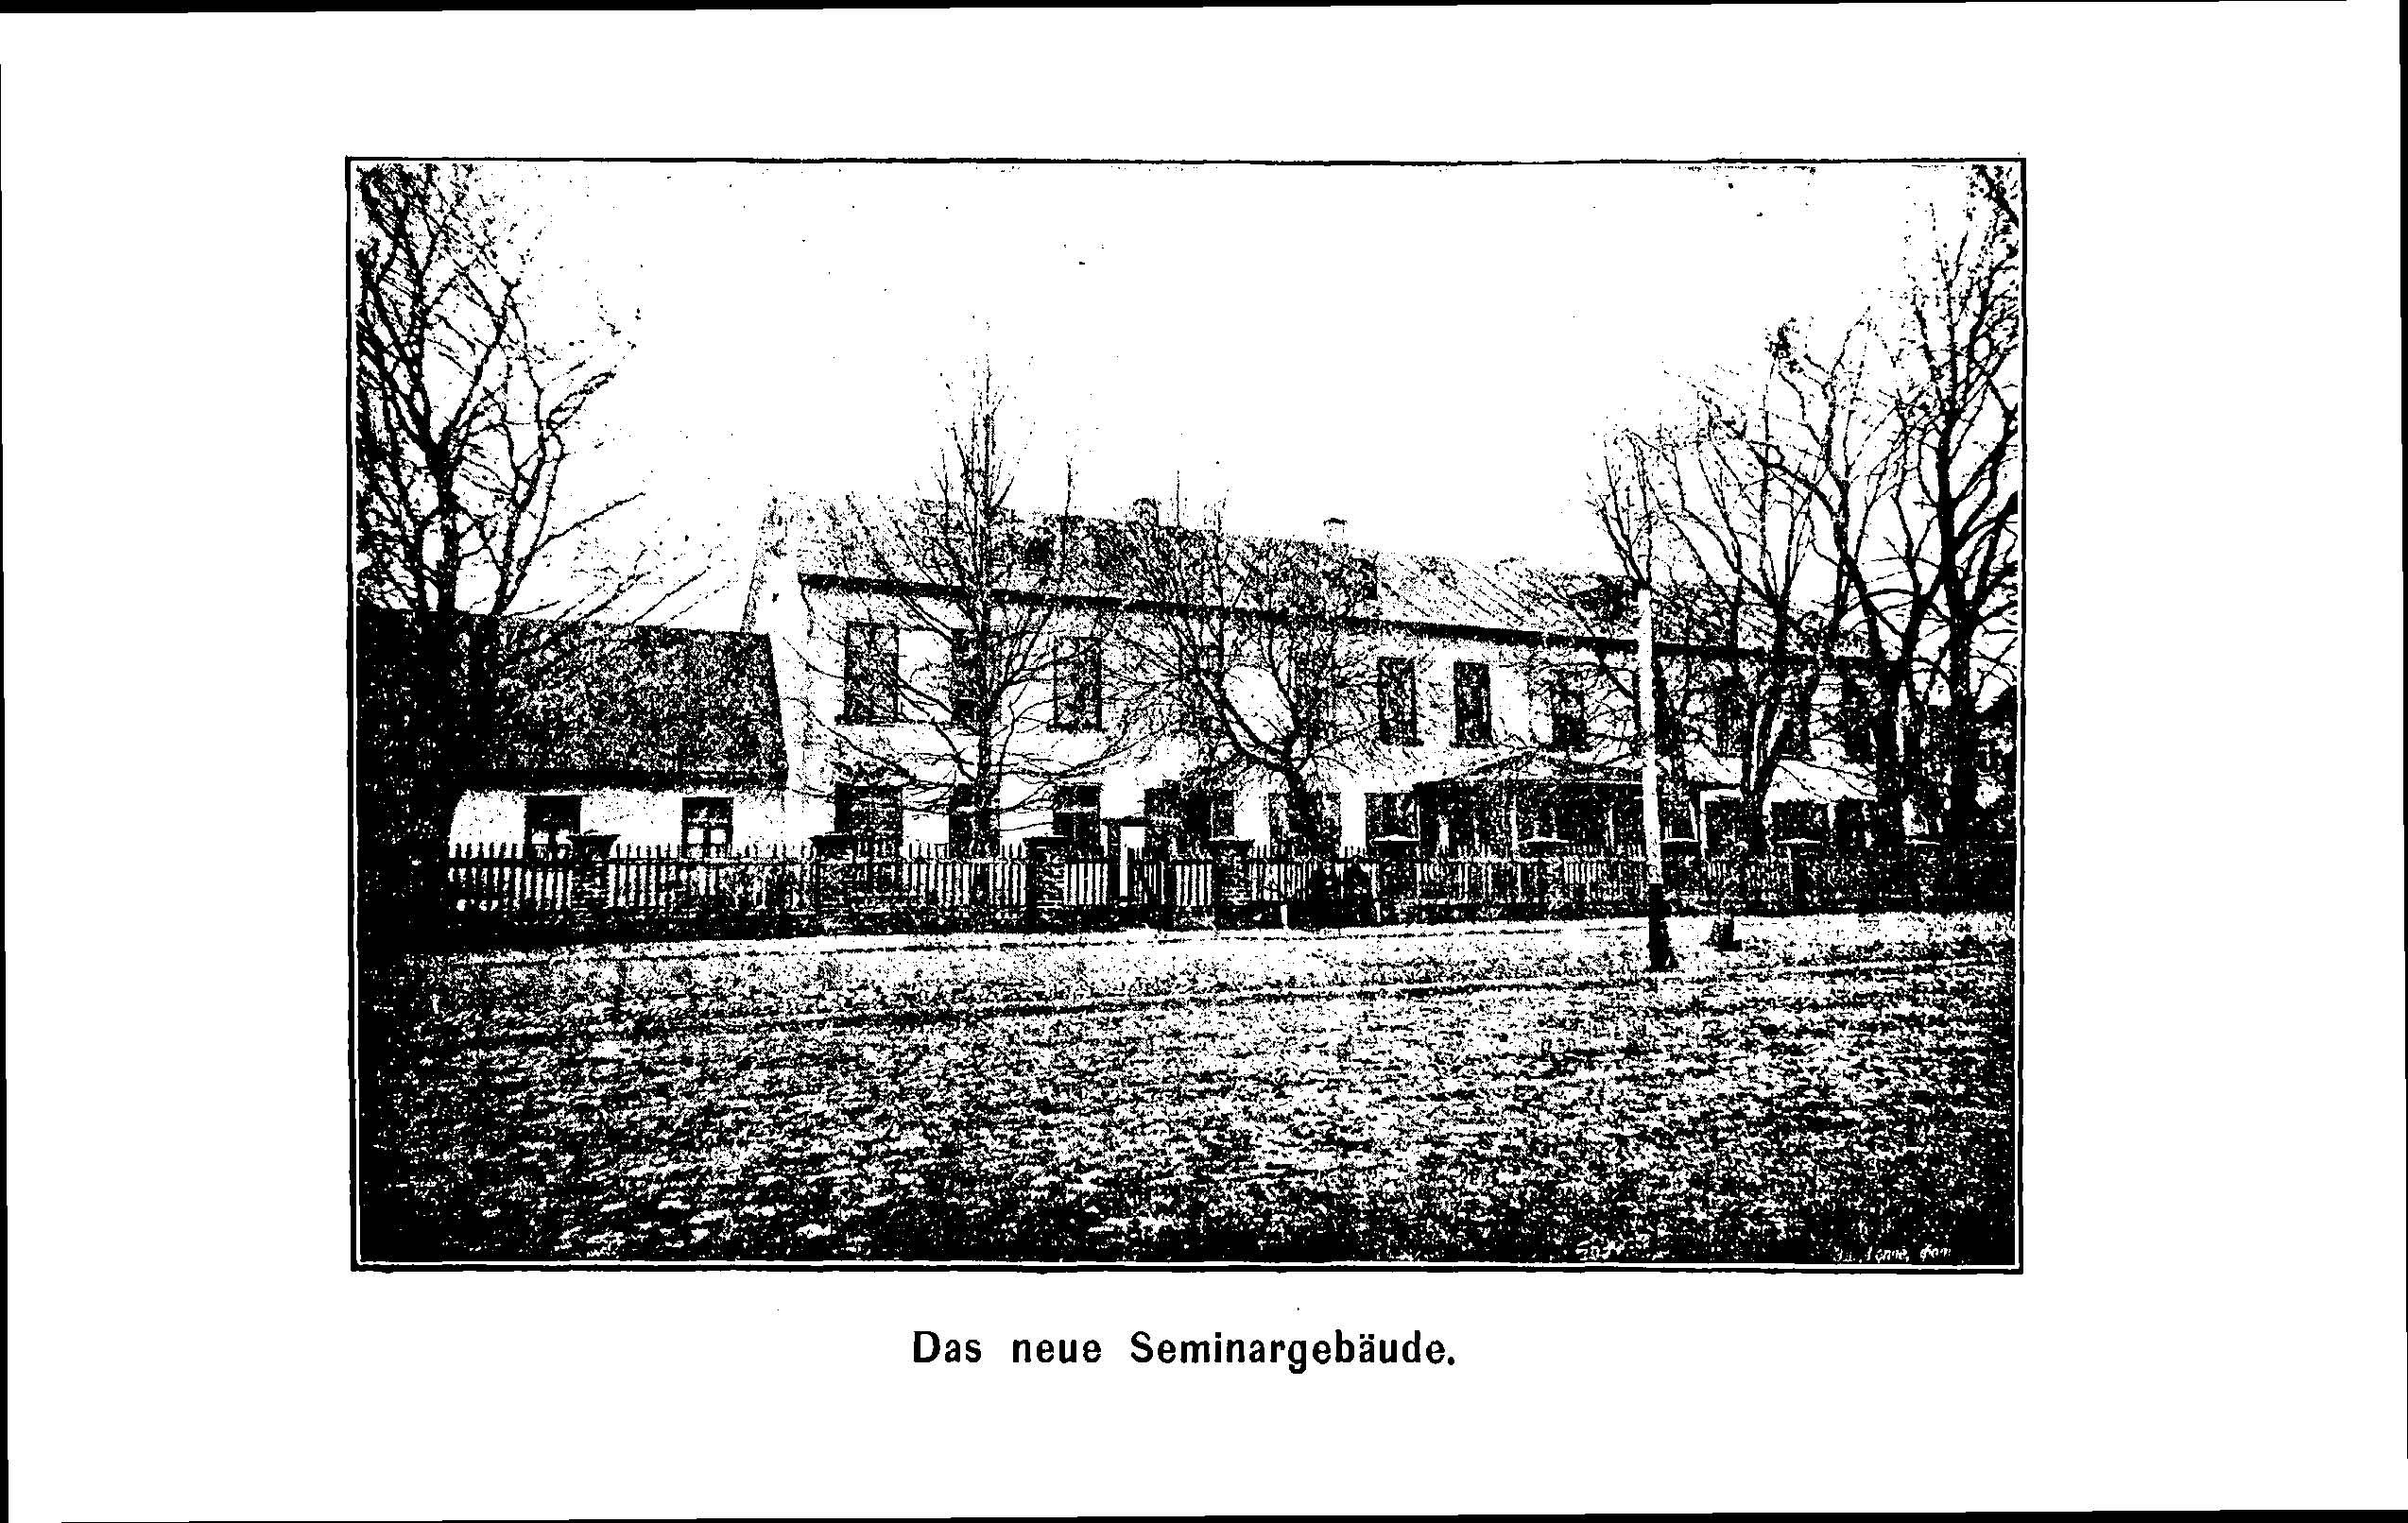 Das Erste Dorpatsche Lehrer-Seminar (1890) | 43. Основной текст